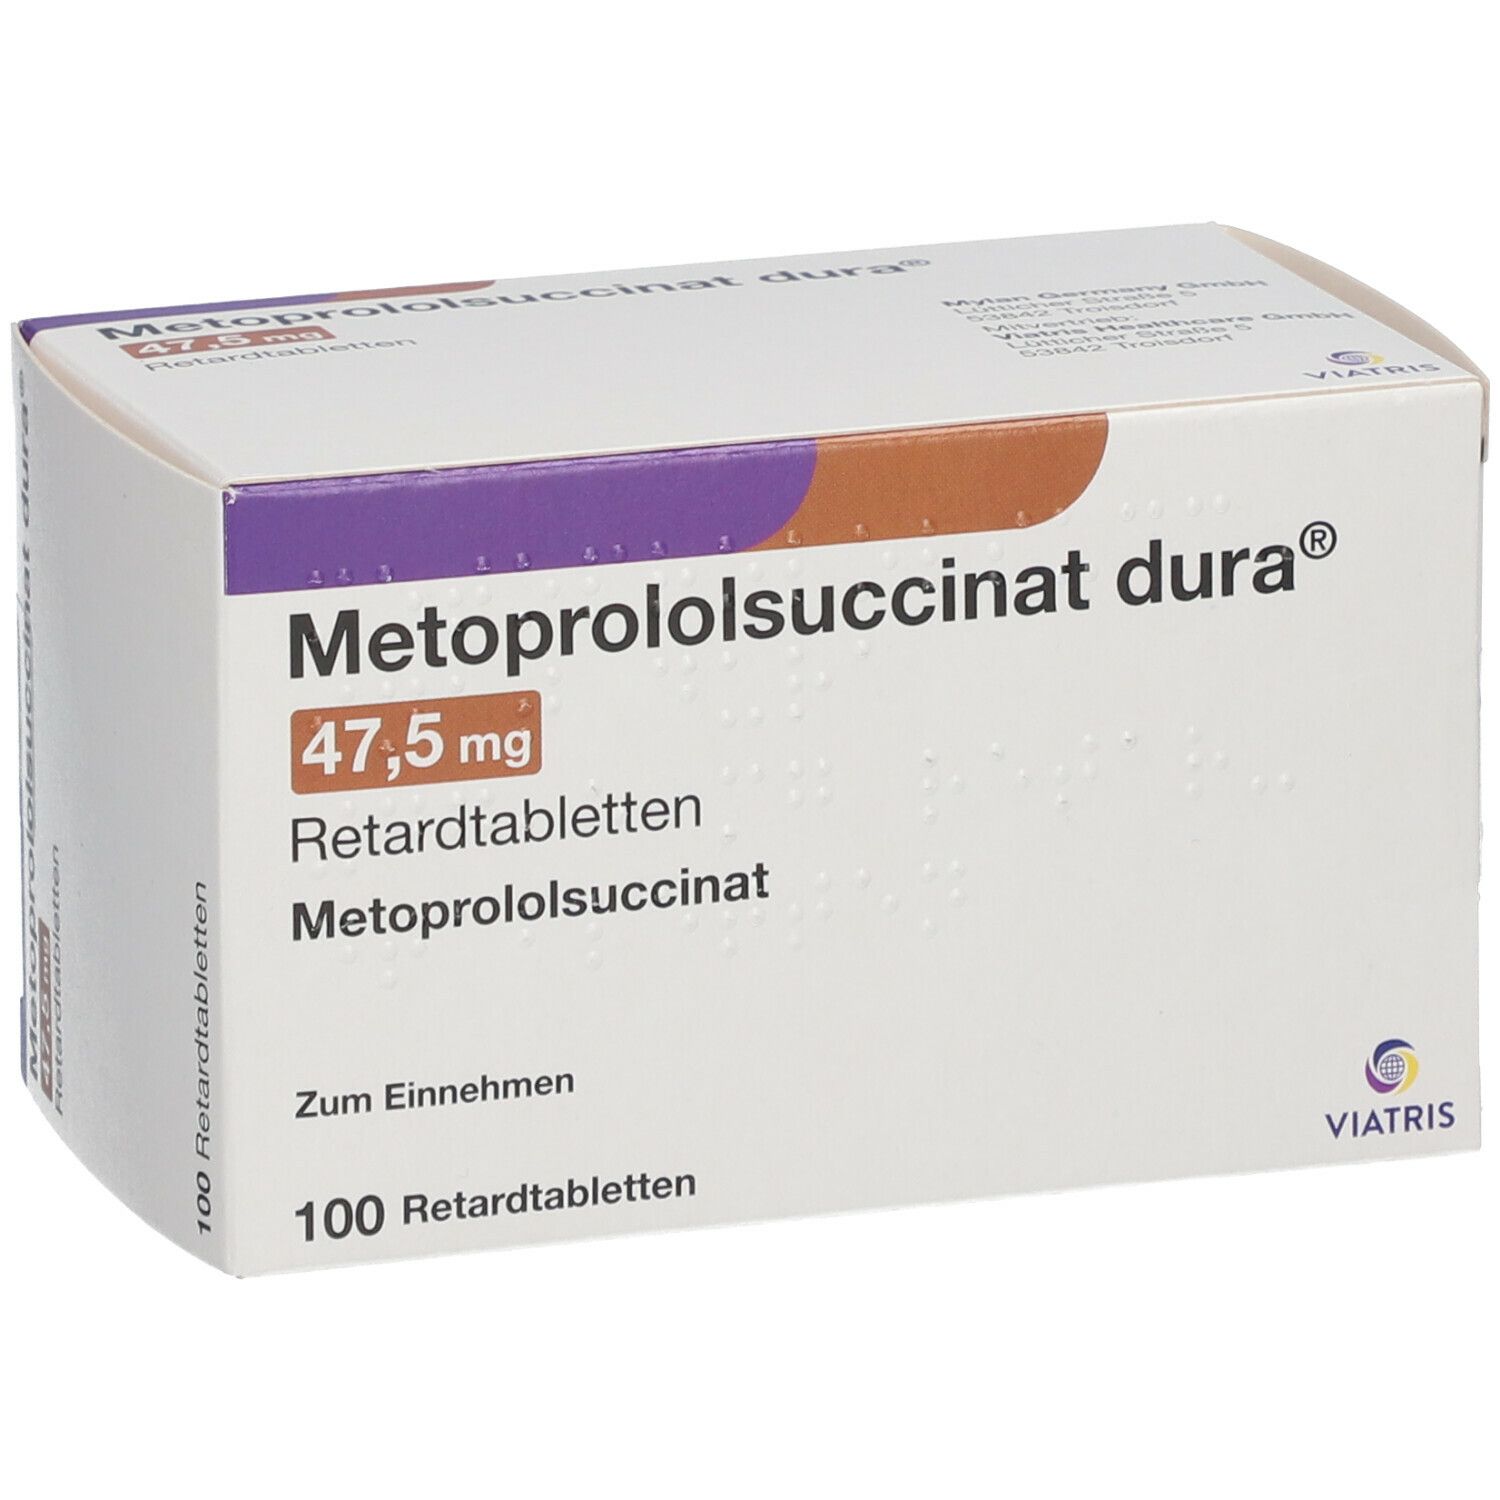 Metoprololsuccinat dura® 47,5  mg